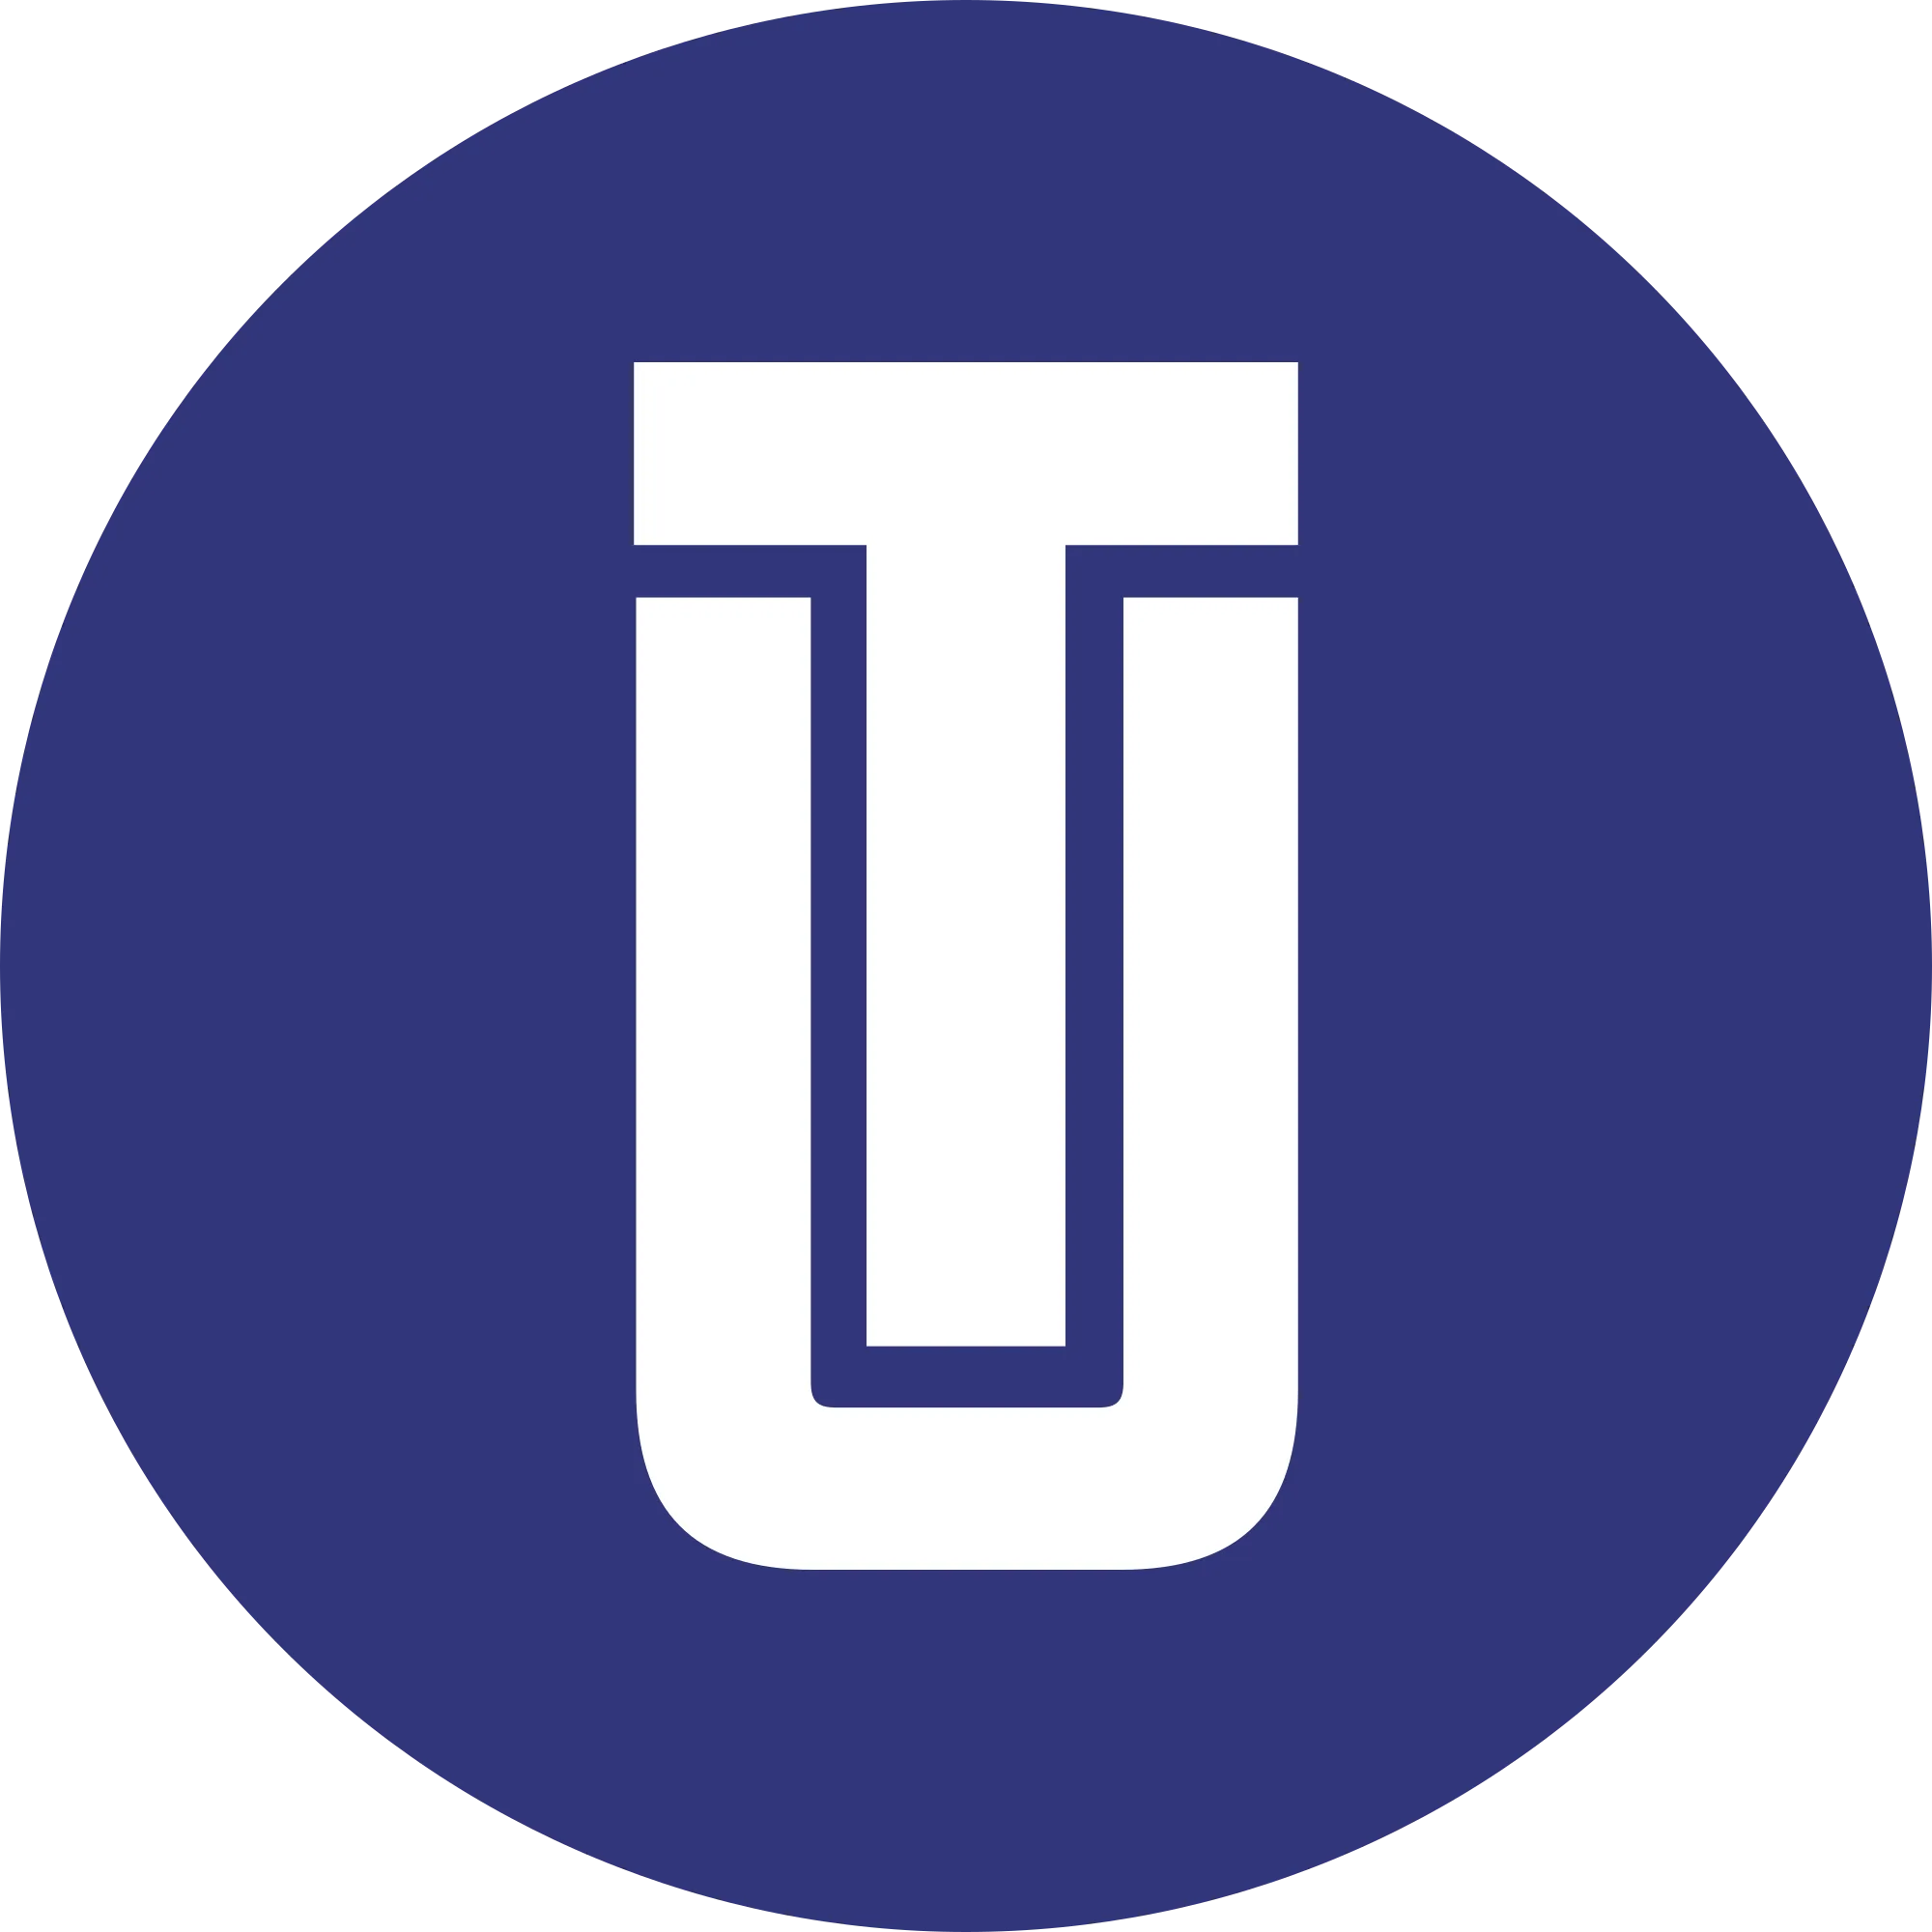 Utrust logo in png format